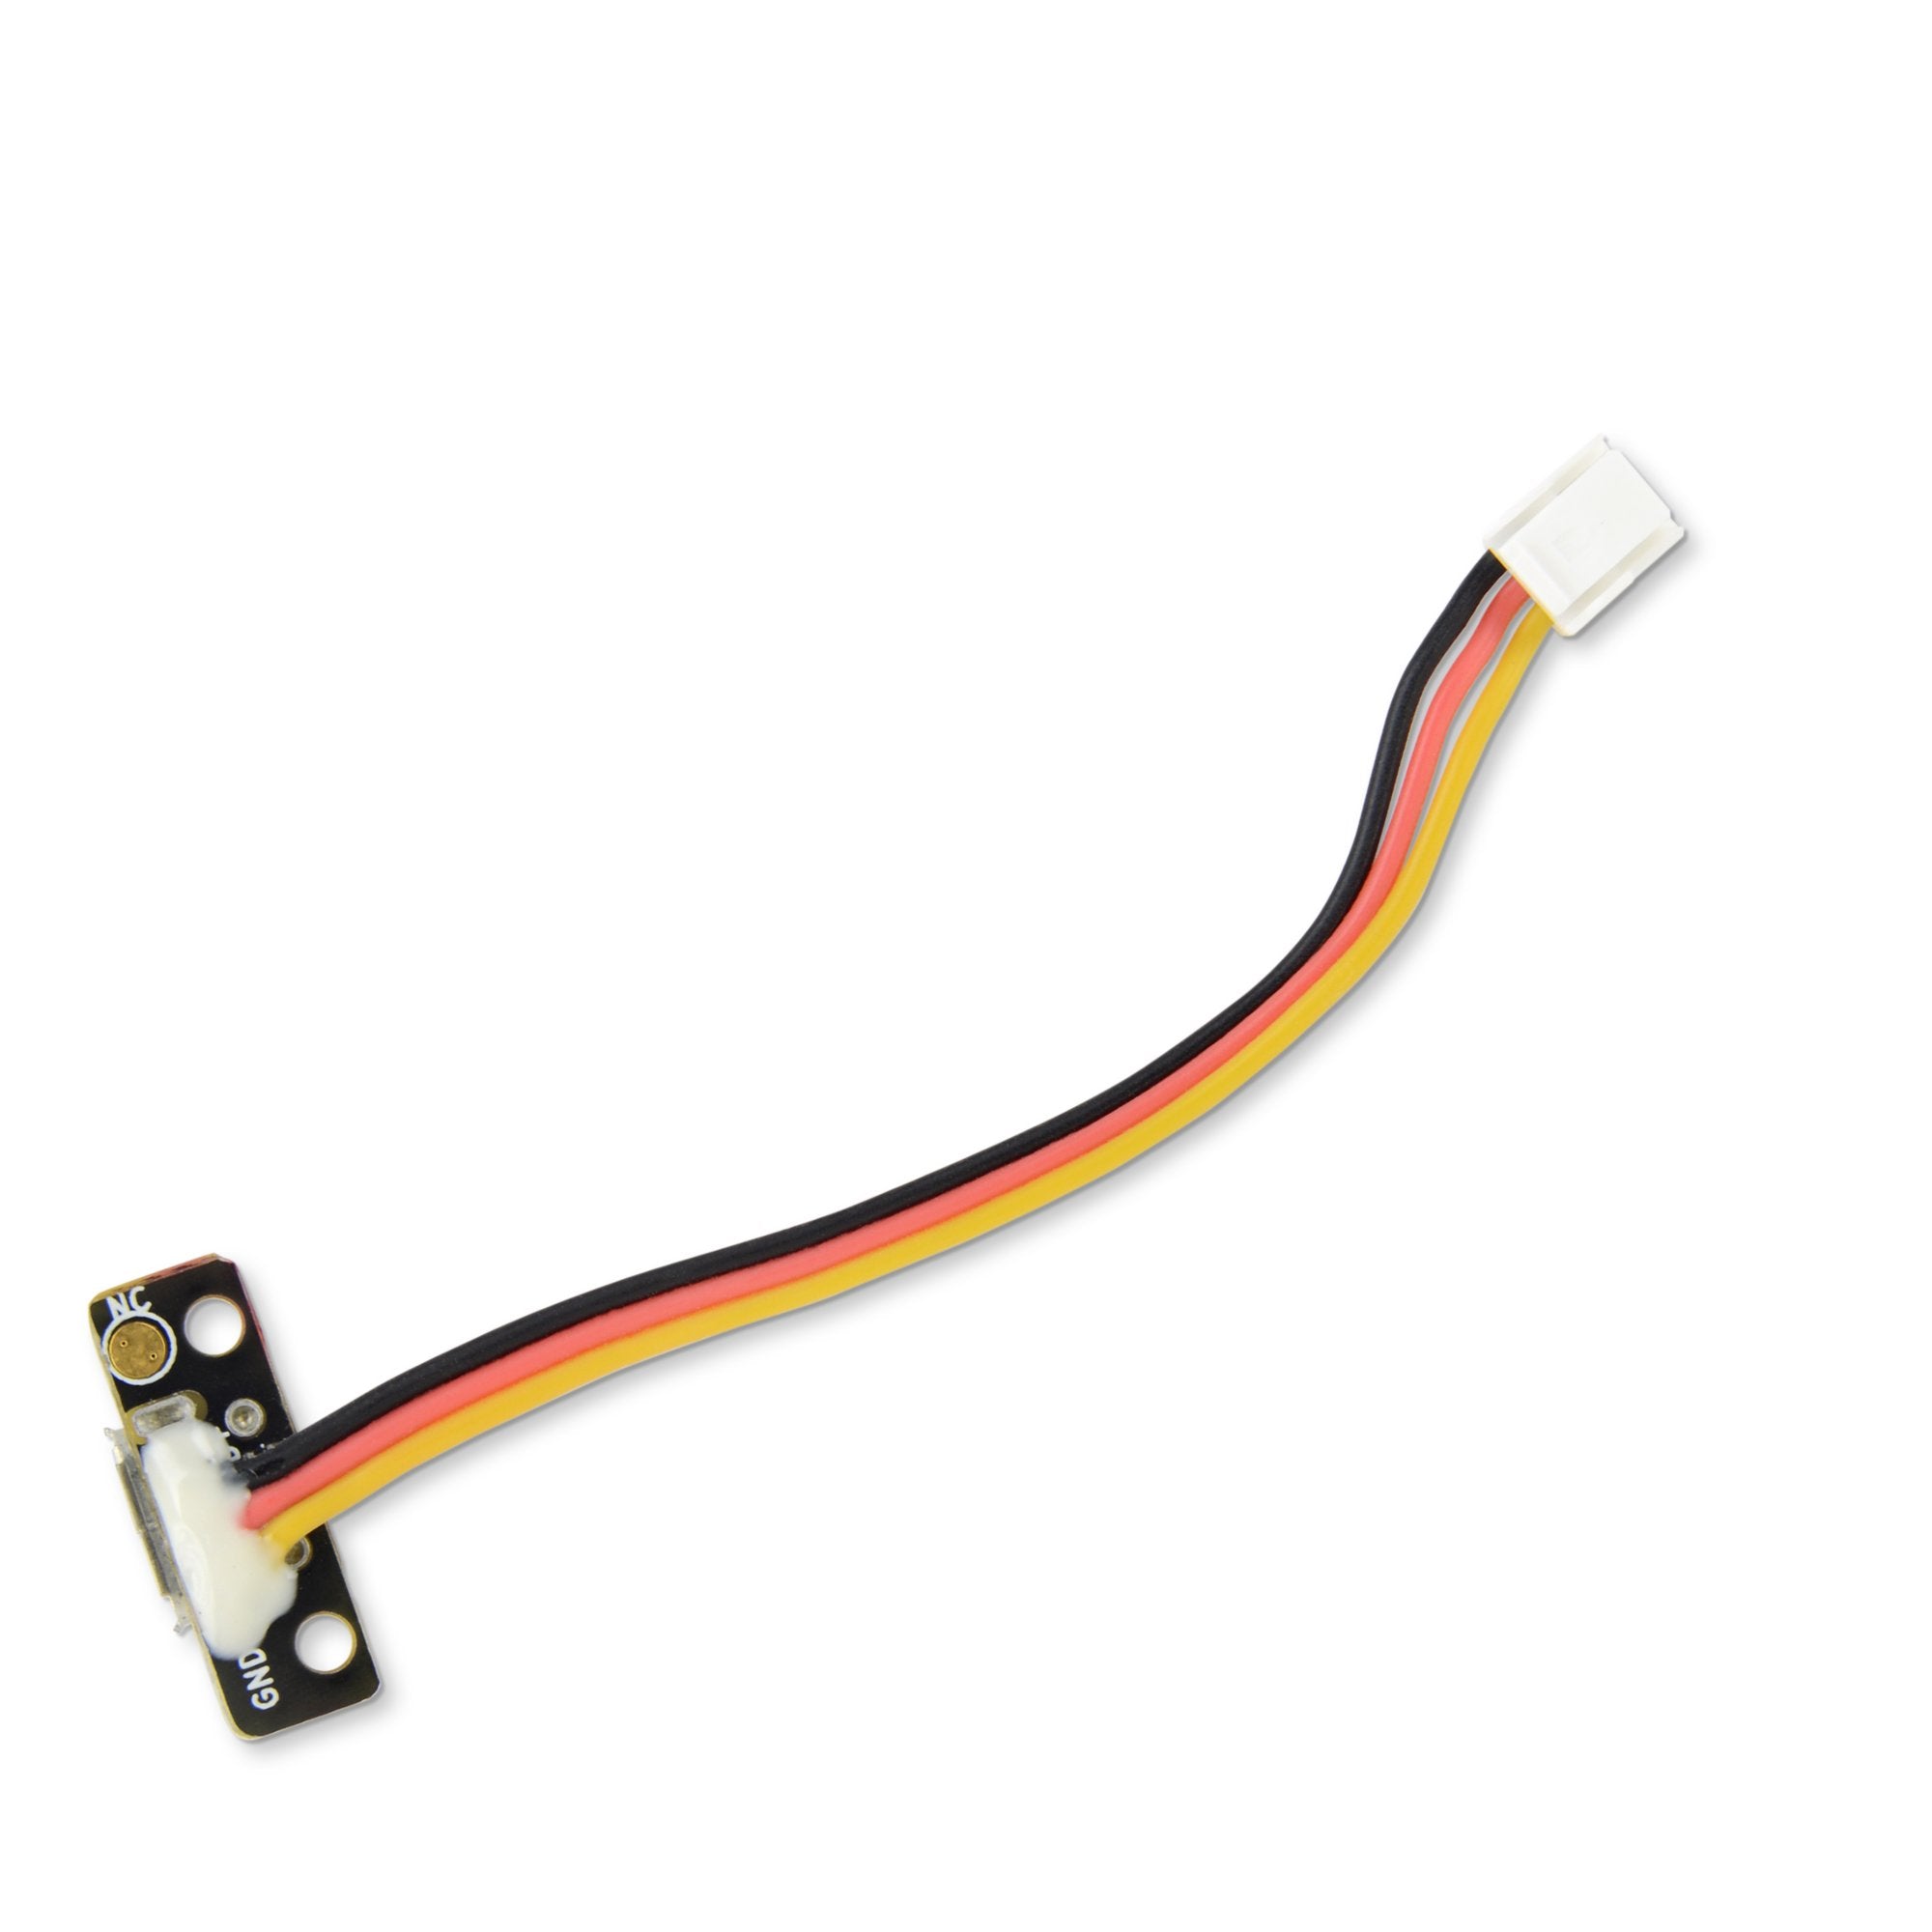 DJI Phantom 3 Standard / Pro / Advanced USB Port Cable